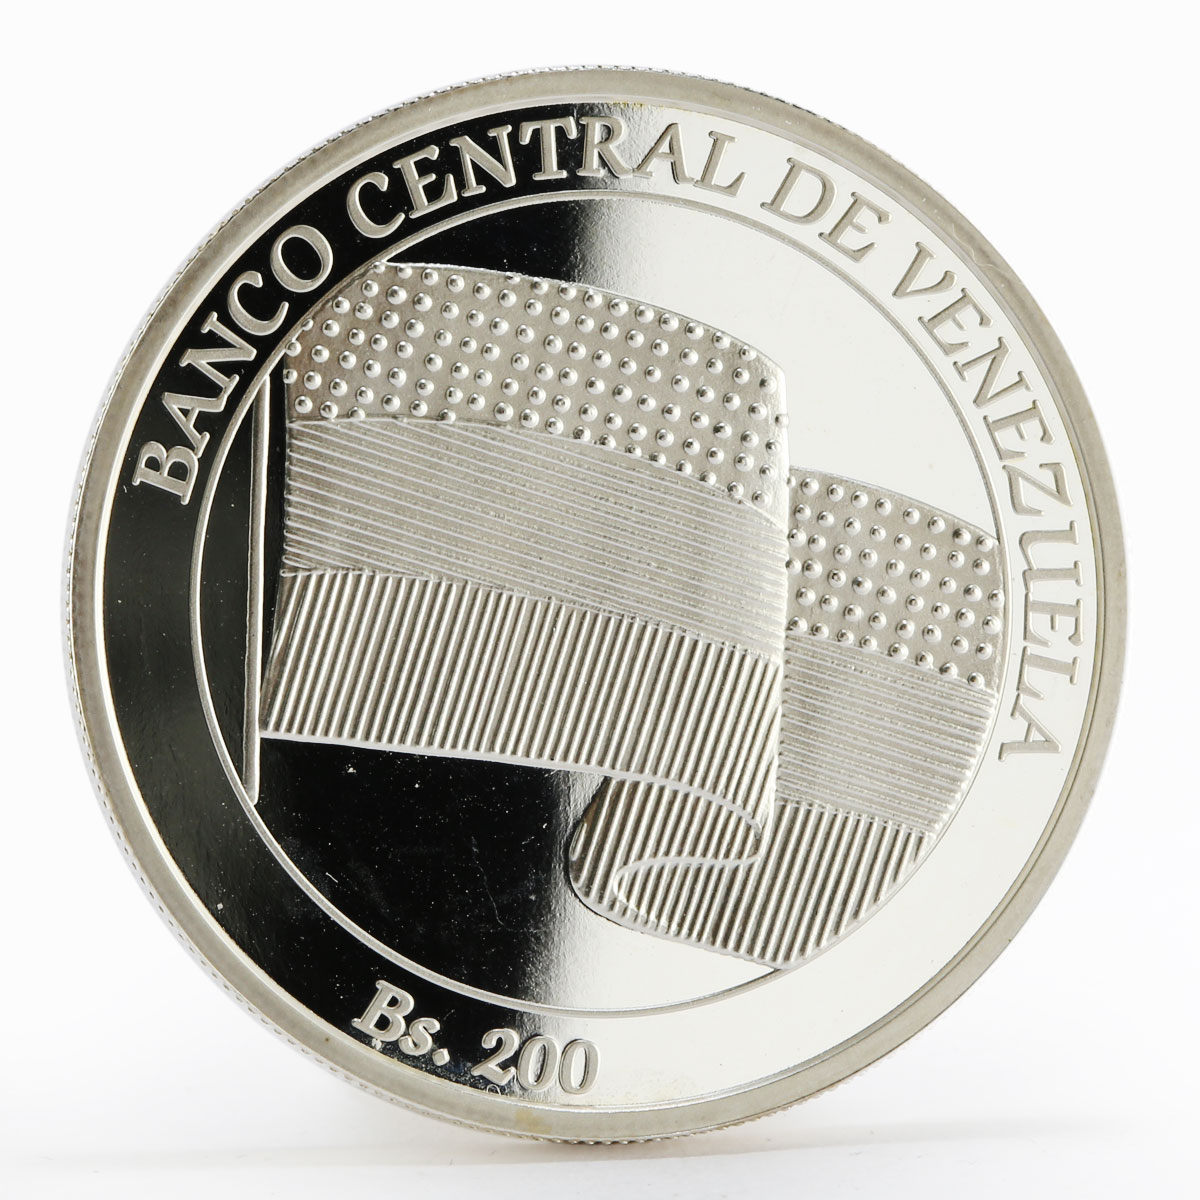 Venezuela 200 bolivares Disembark of Francisco de Miranda proof silver coin 2010